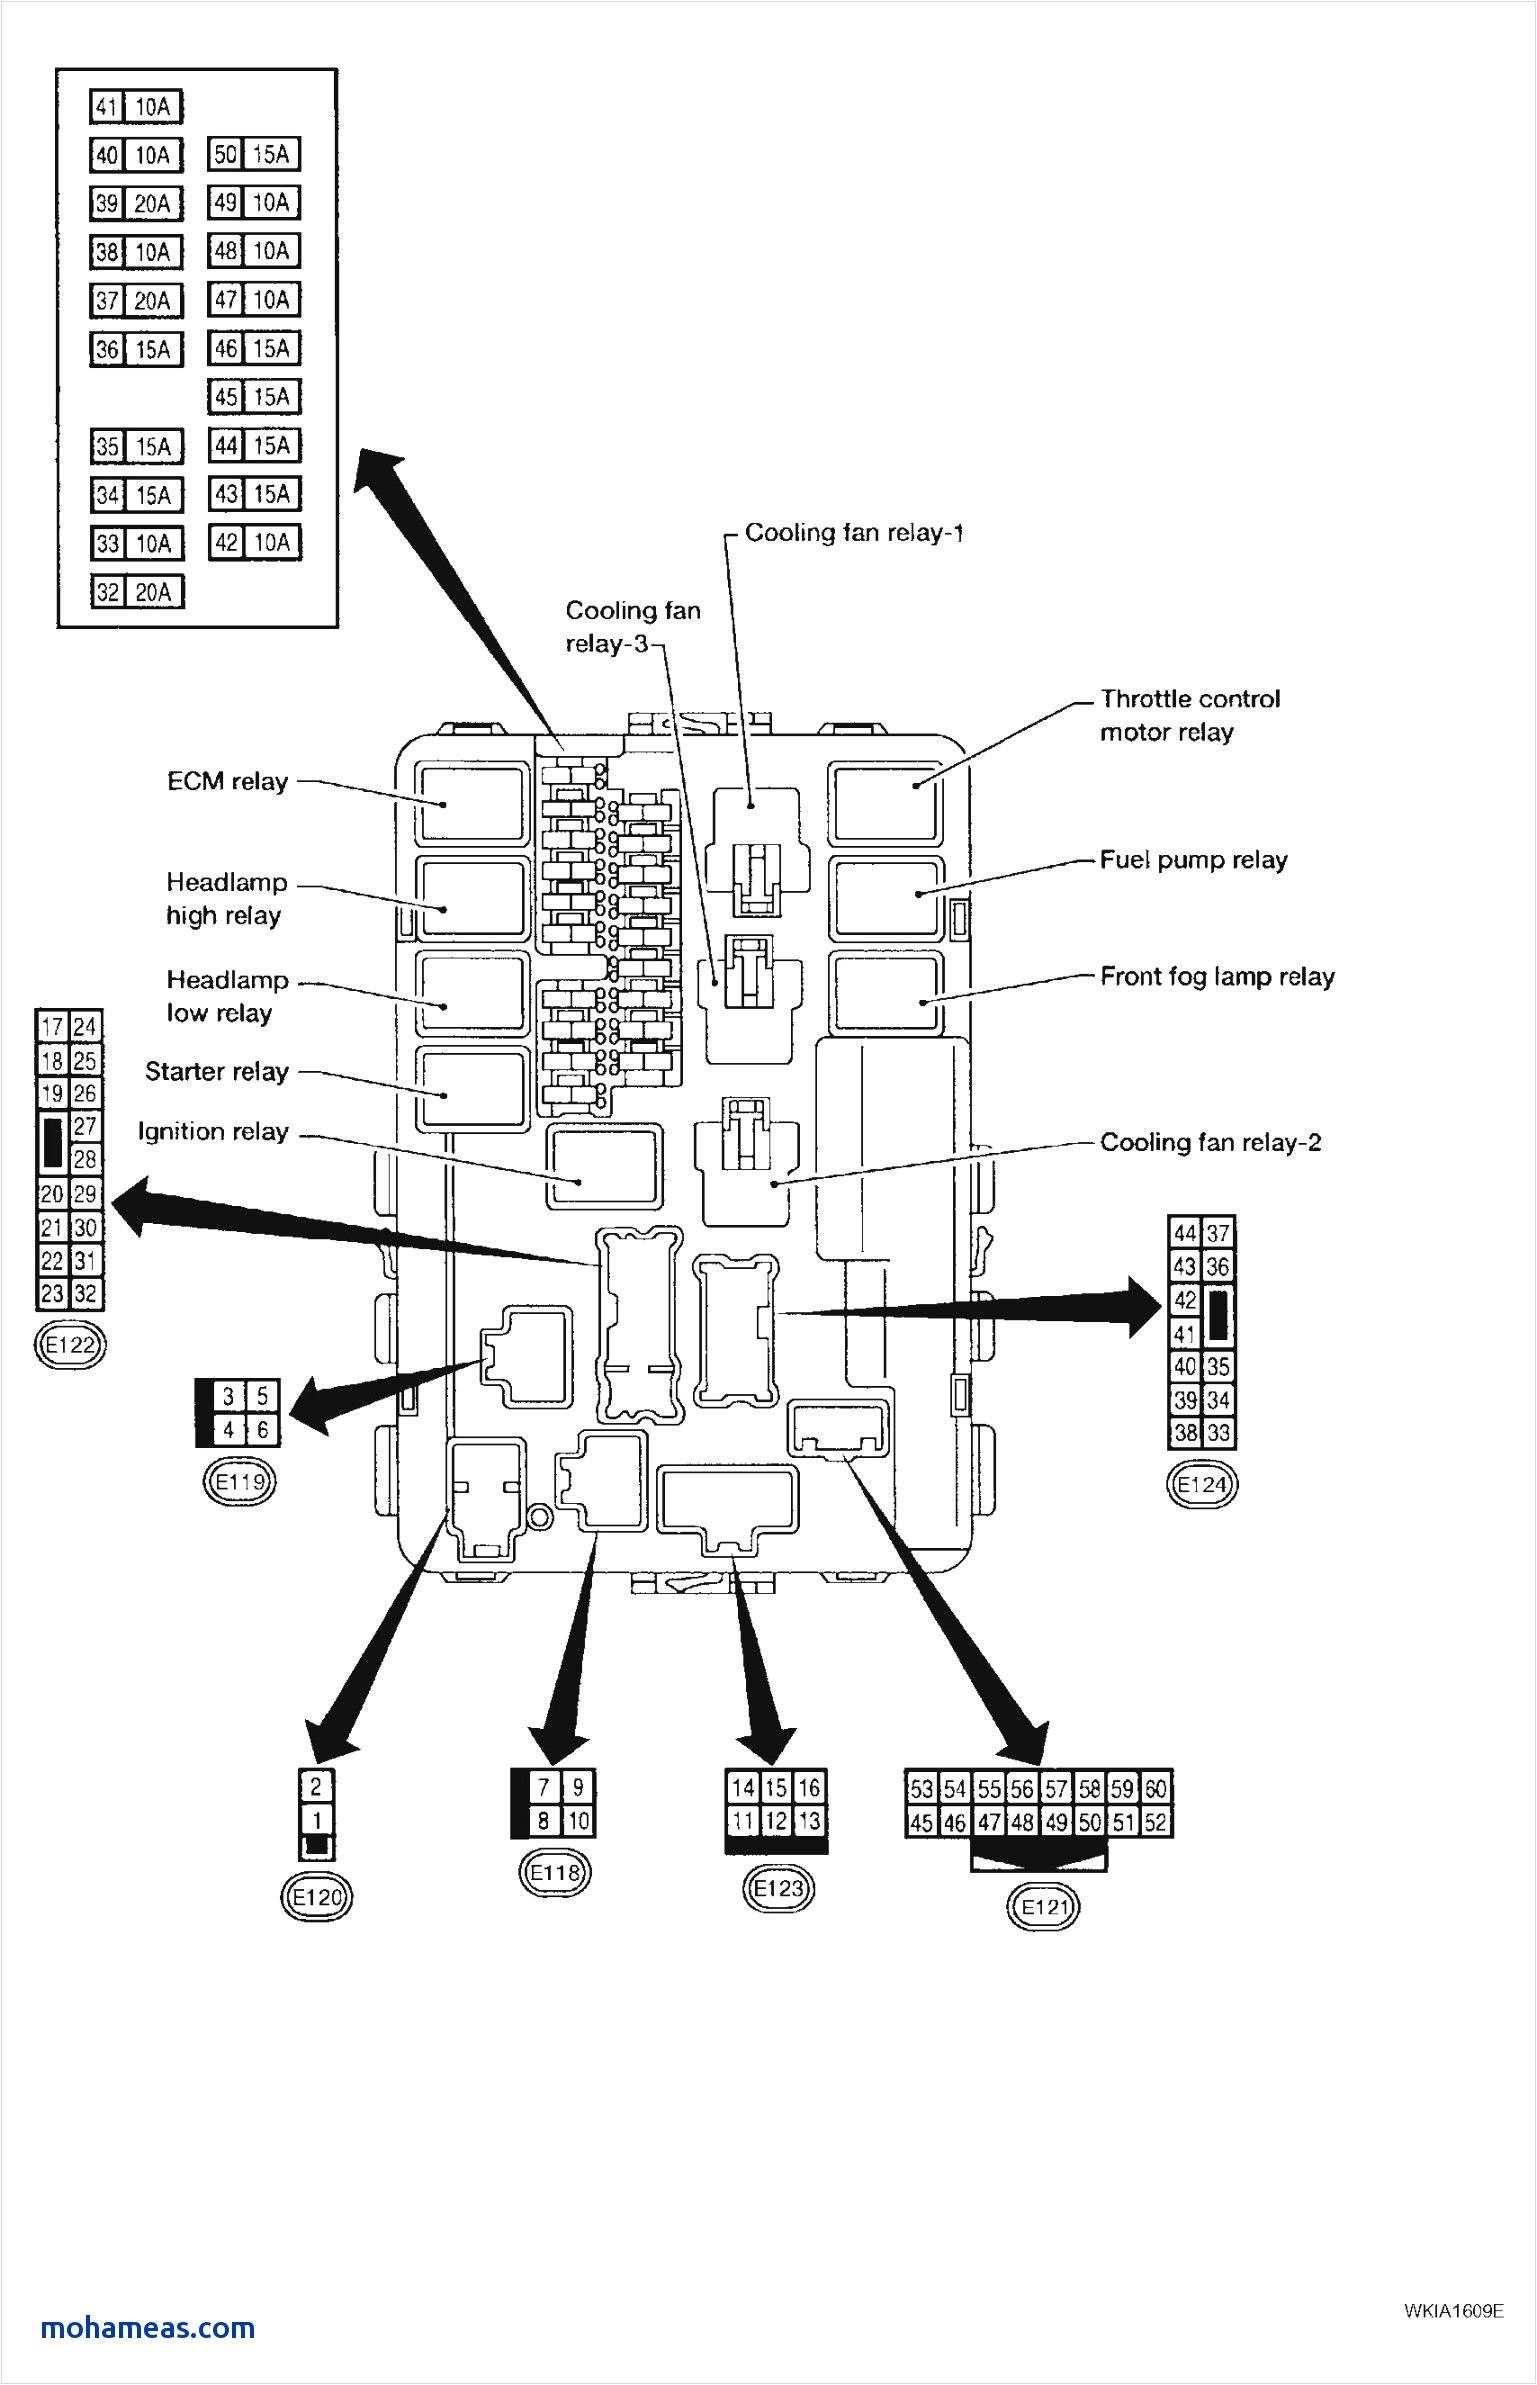 2005 nissan altima fuse box diagram wiring library in 2005 maxima fuse box diagram jpg